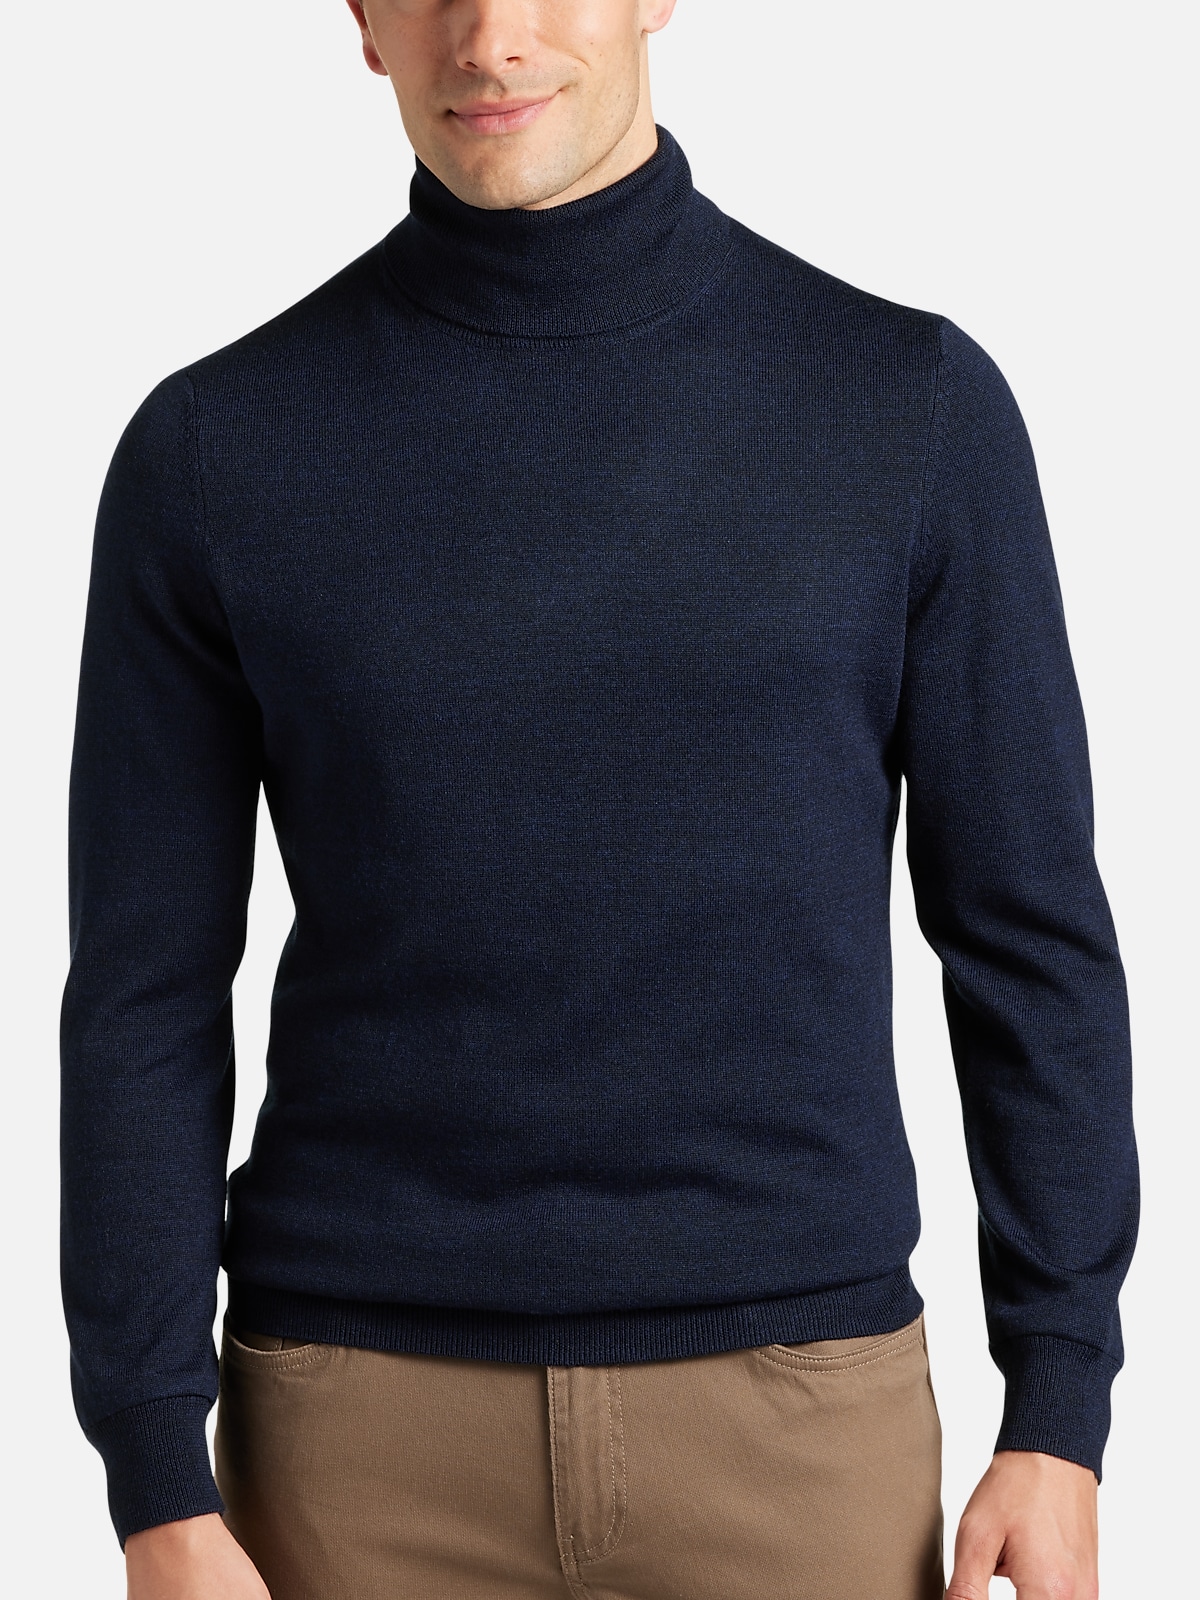 Joseph Abboud Modern Fit Turtleneck Merino Wool Sweater | New Arrivals ...